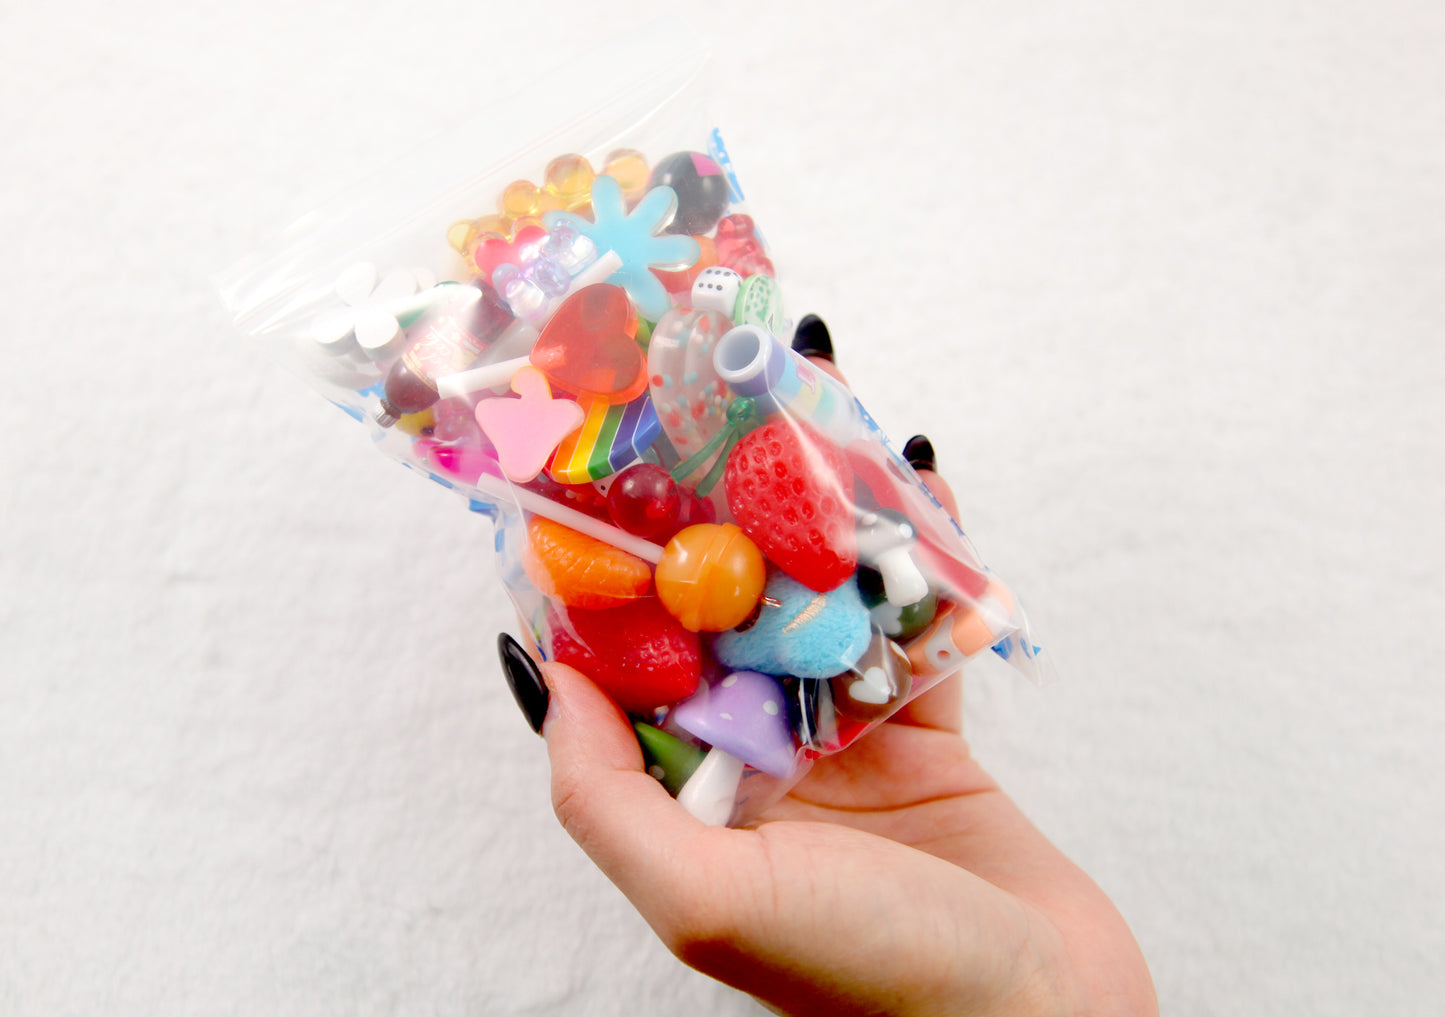 Candy Charms, Grab Bag Mix, 25-50 pieces of Cute Kawaii Food